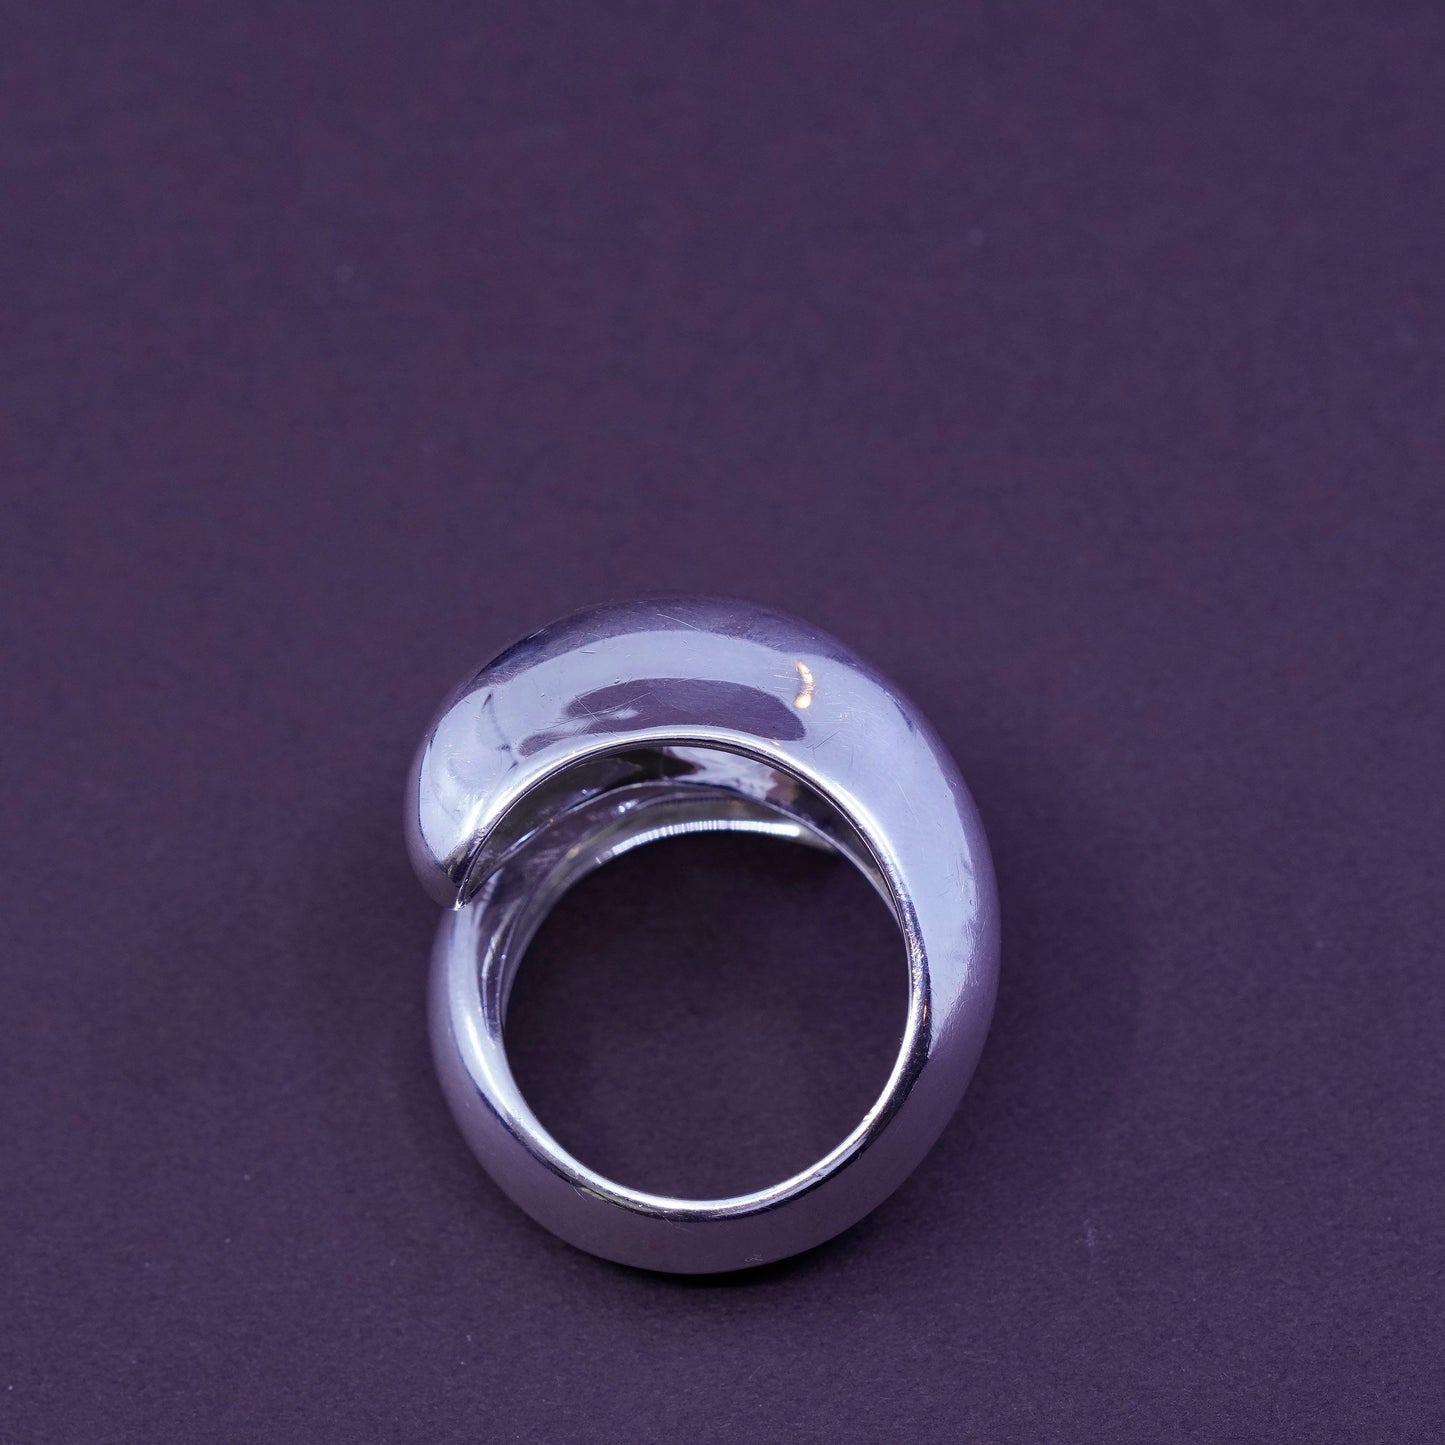 Size 9.5, Robert Lee Morris Studio Sterling silver handmade ring, wrap 925 band